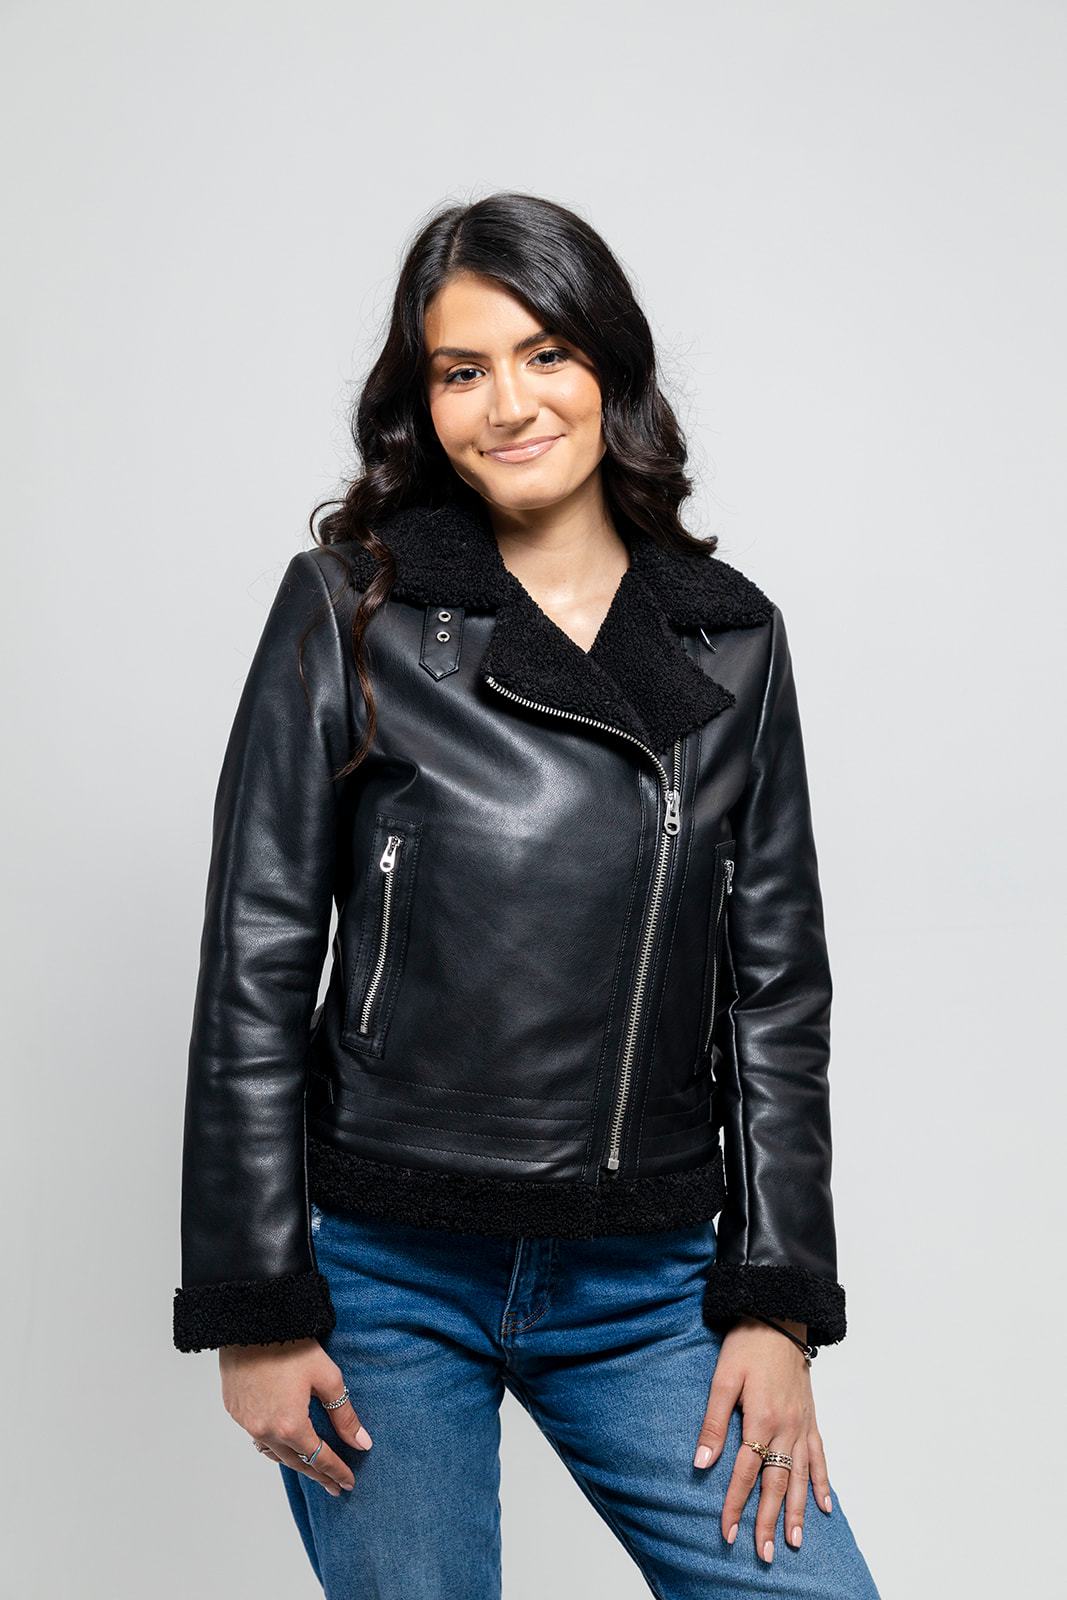 Chelsea - Women's Faux Leather Jacket (POS) Women's Fashion Leather Jacket Whet Blu NYC   